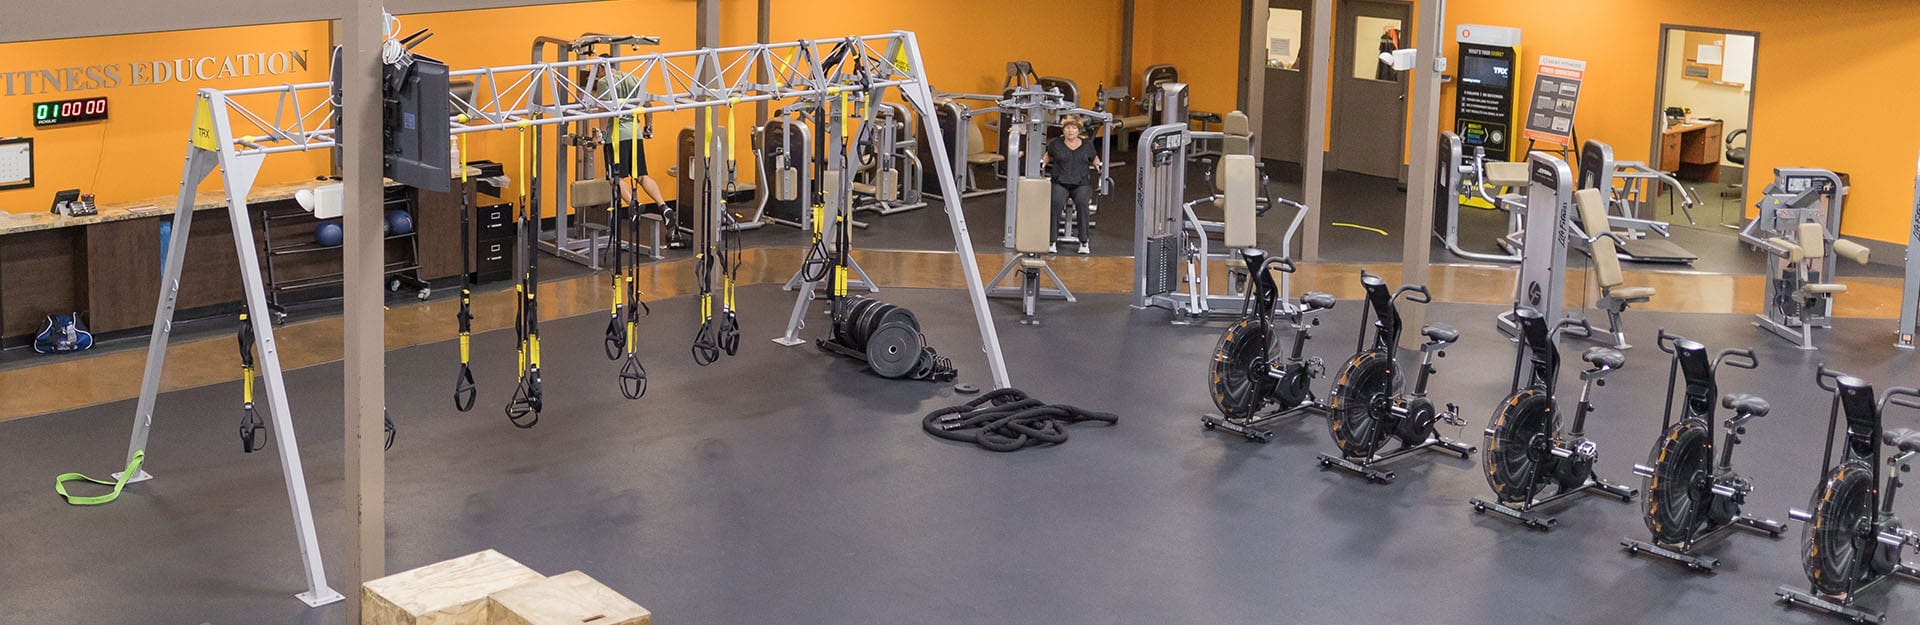 functional training area inside modern gym